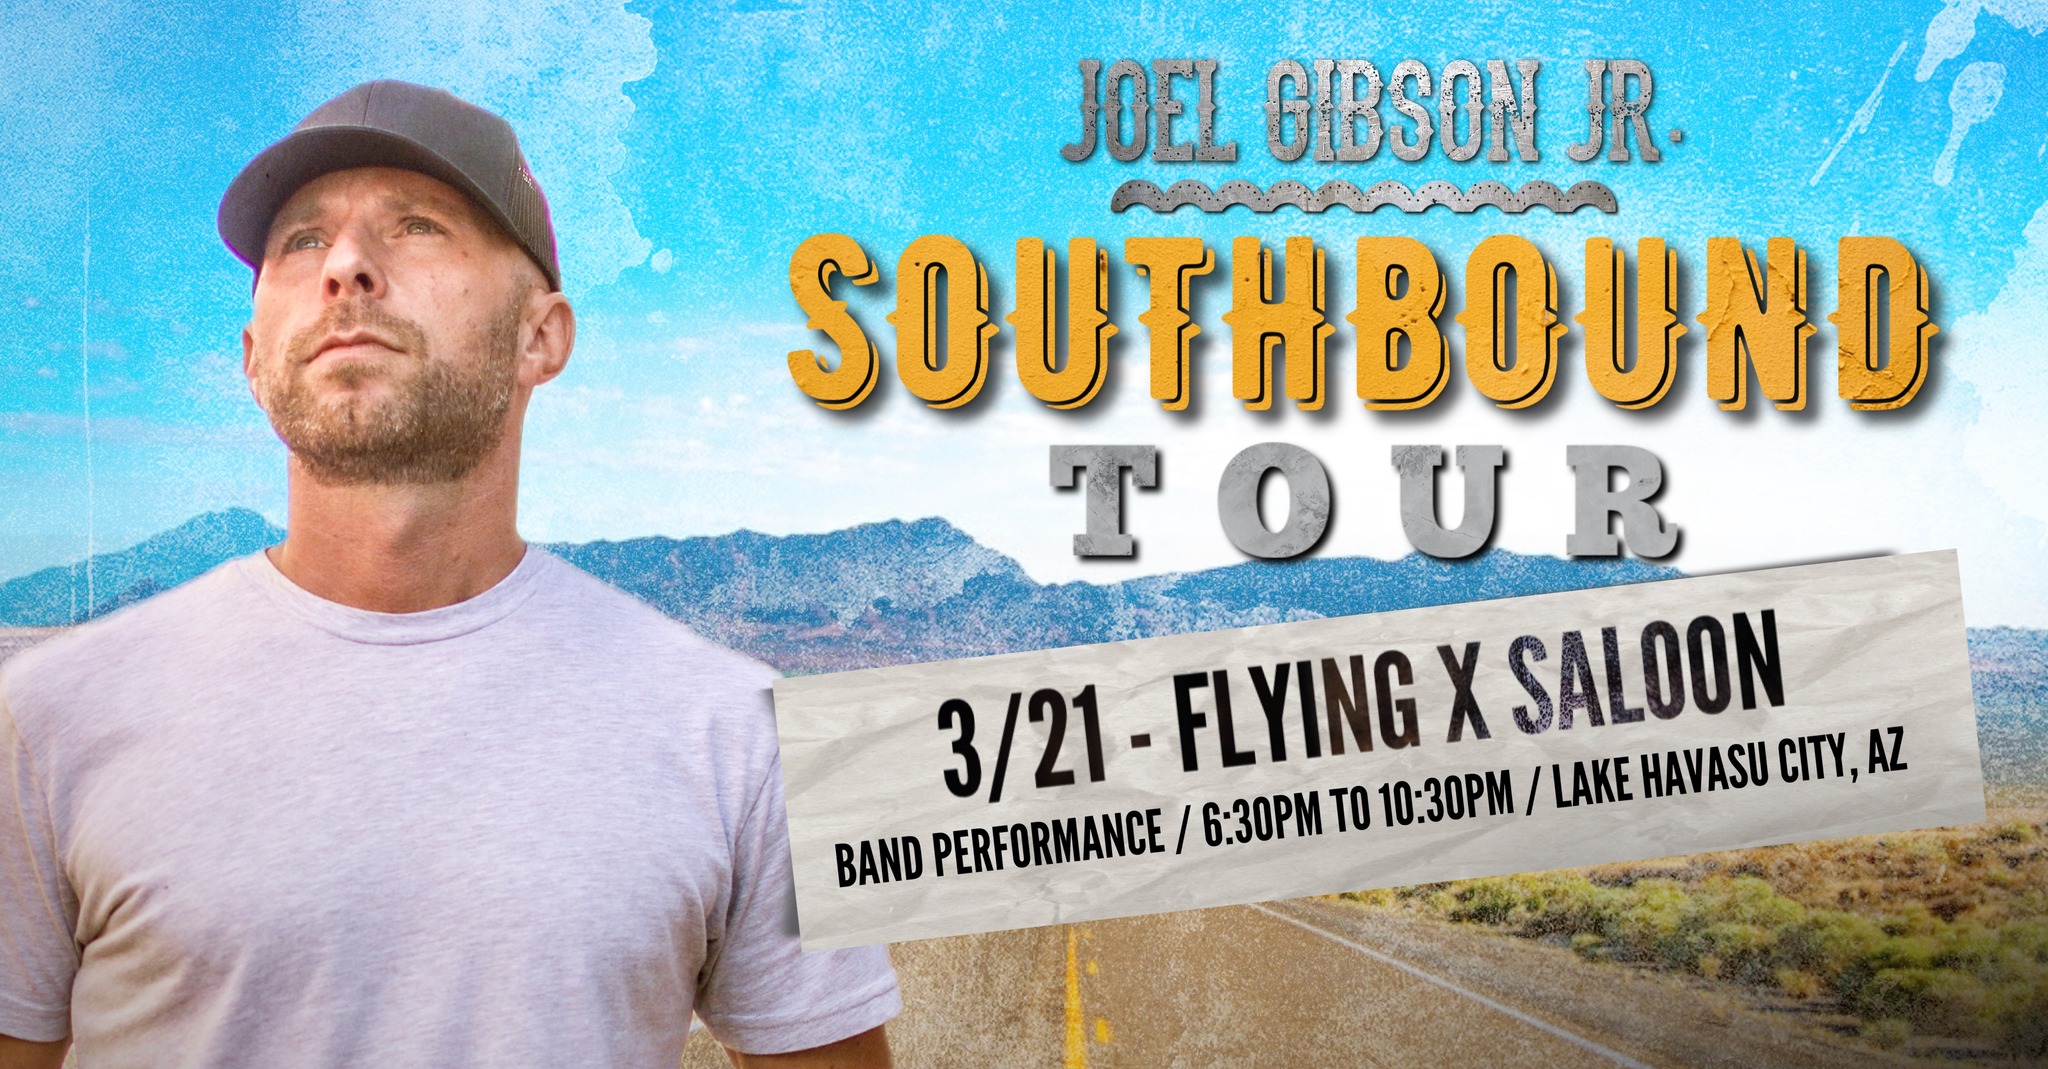 Joel Gibson Jr. Live @ The Flying X Saloon